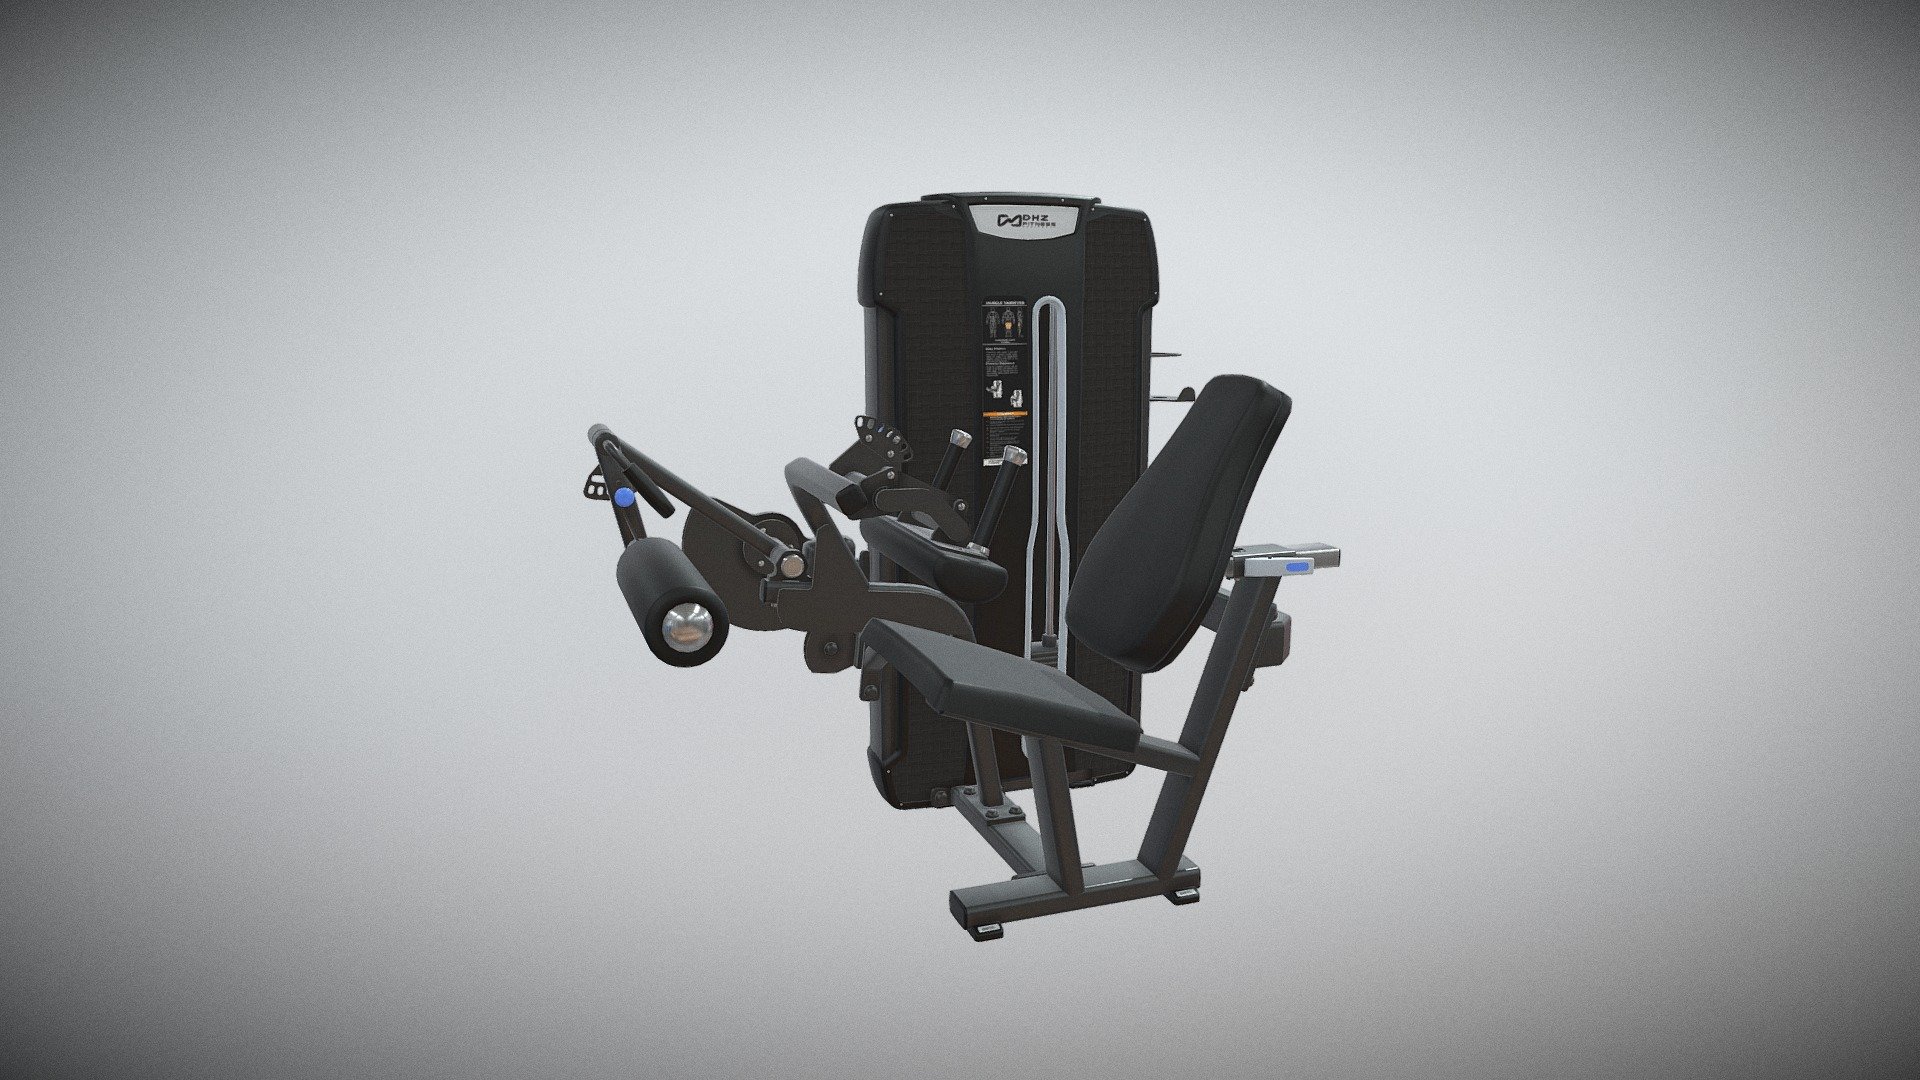 http://dhz-fitness.de/en/style-1#E4023 - SEATED LEG CURL - 3D model by supersport-fitness 3d model